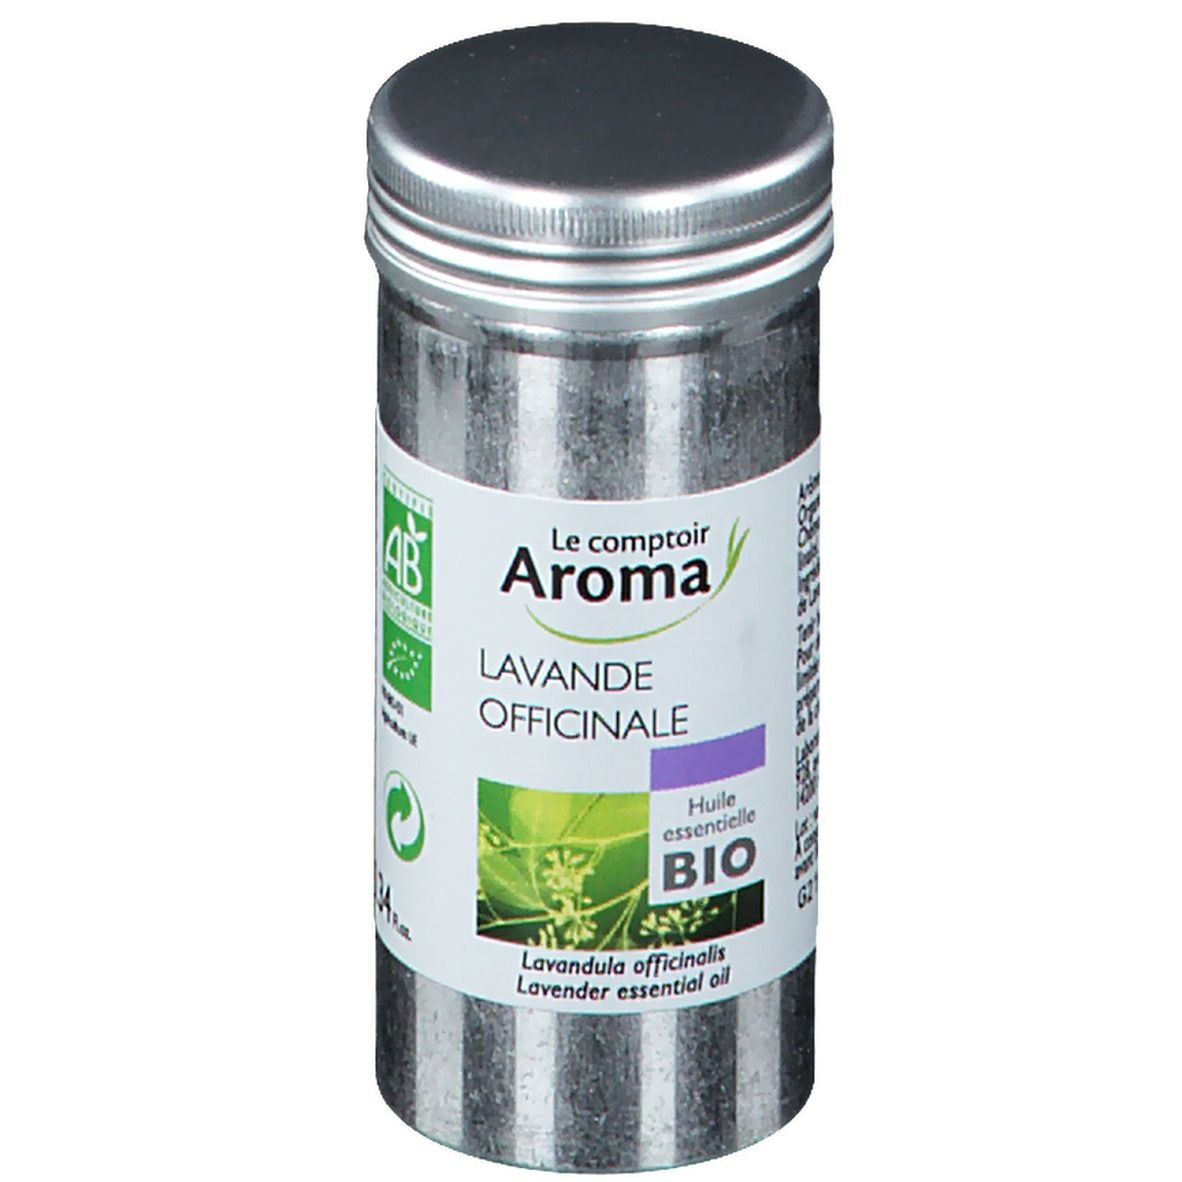 Le Comptoir Aroma huile essentielle bio Lavande officinale